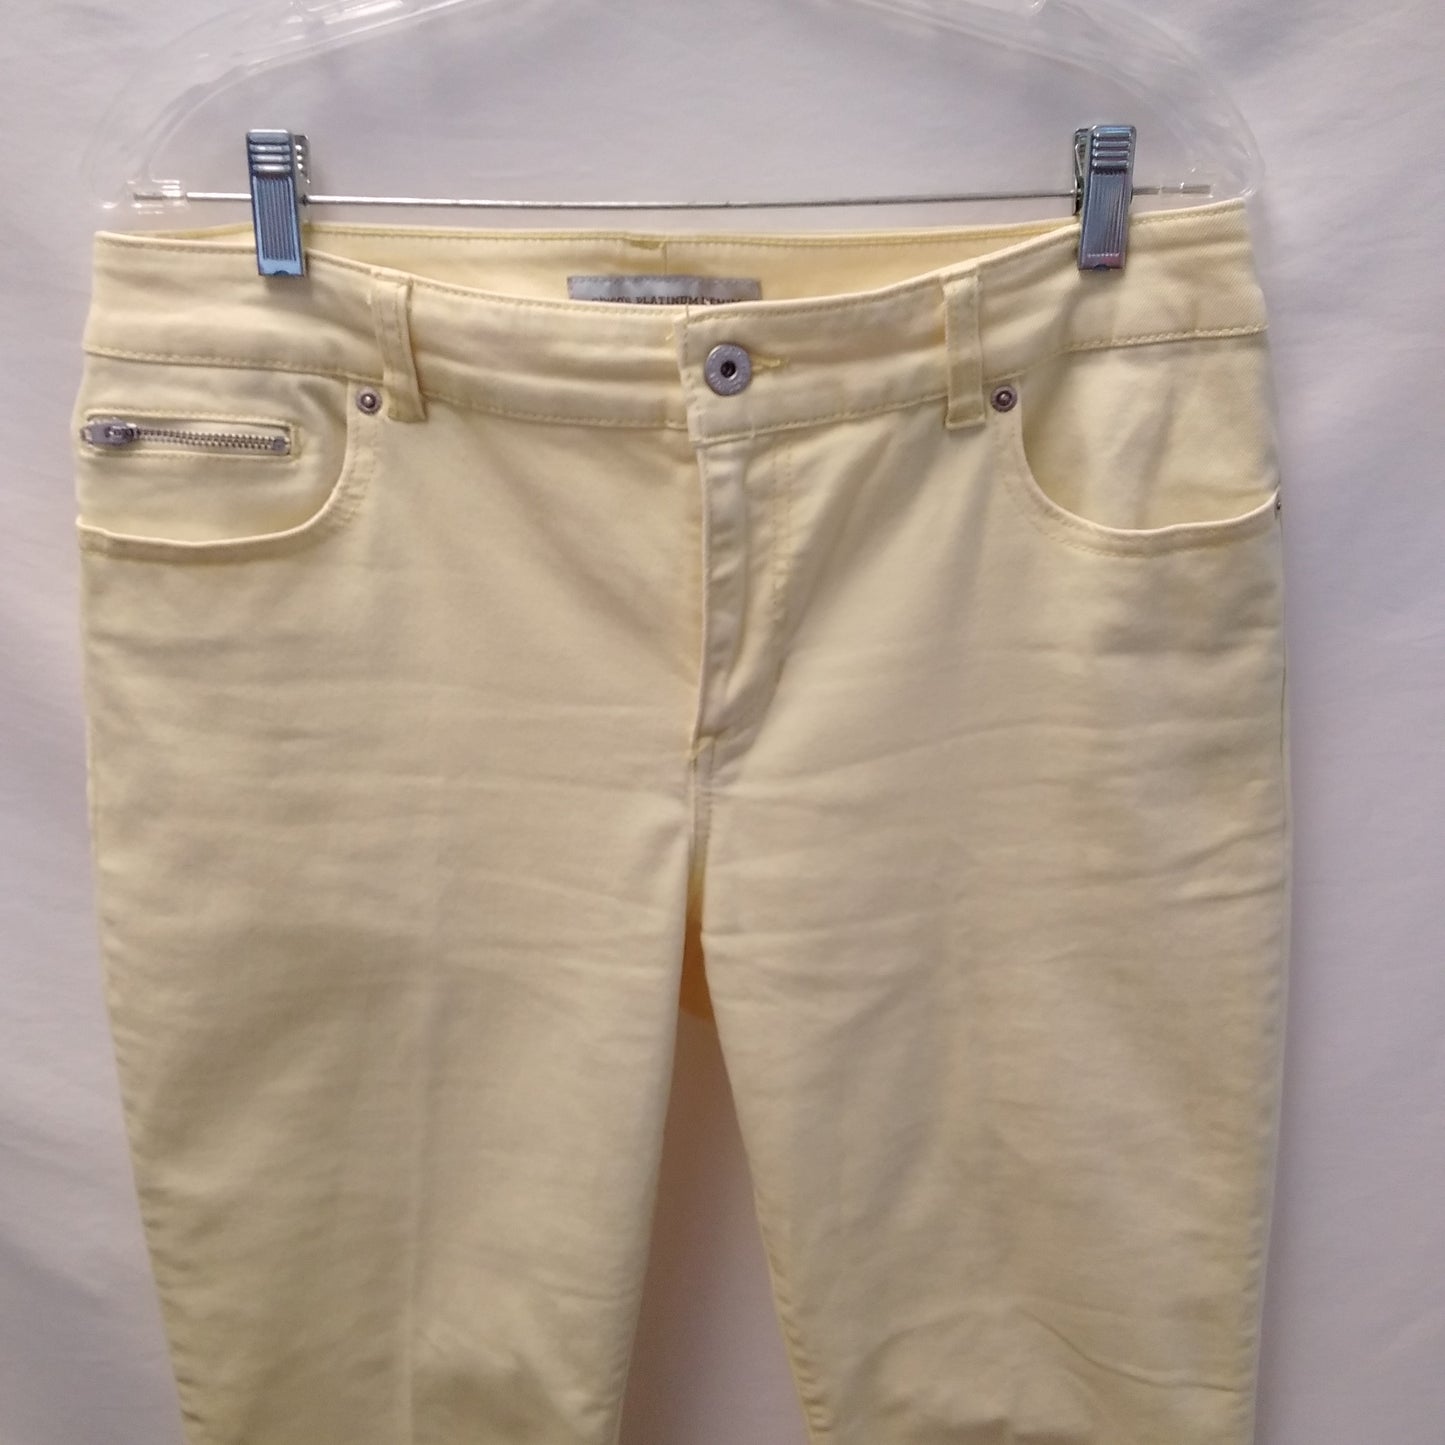 Chico's Platinum Yellow Stretch Denim Jeans - Size: 15